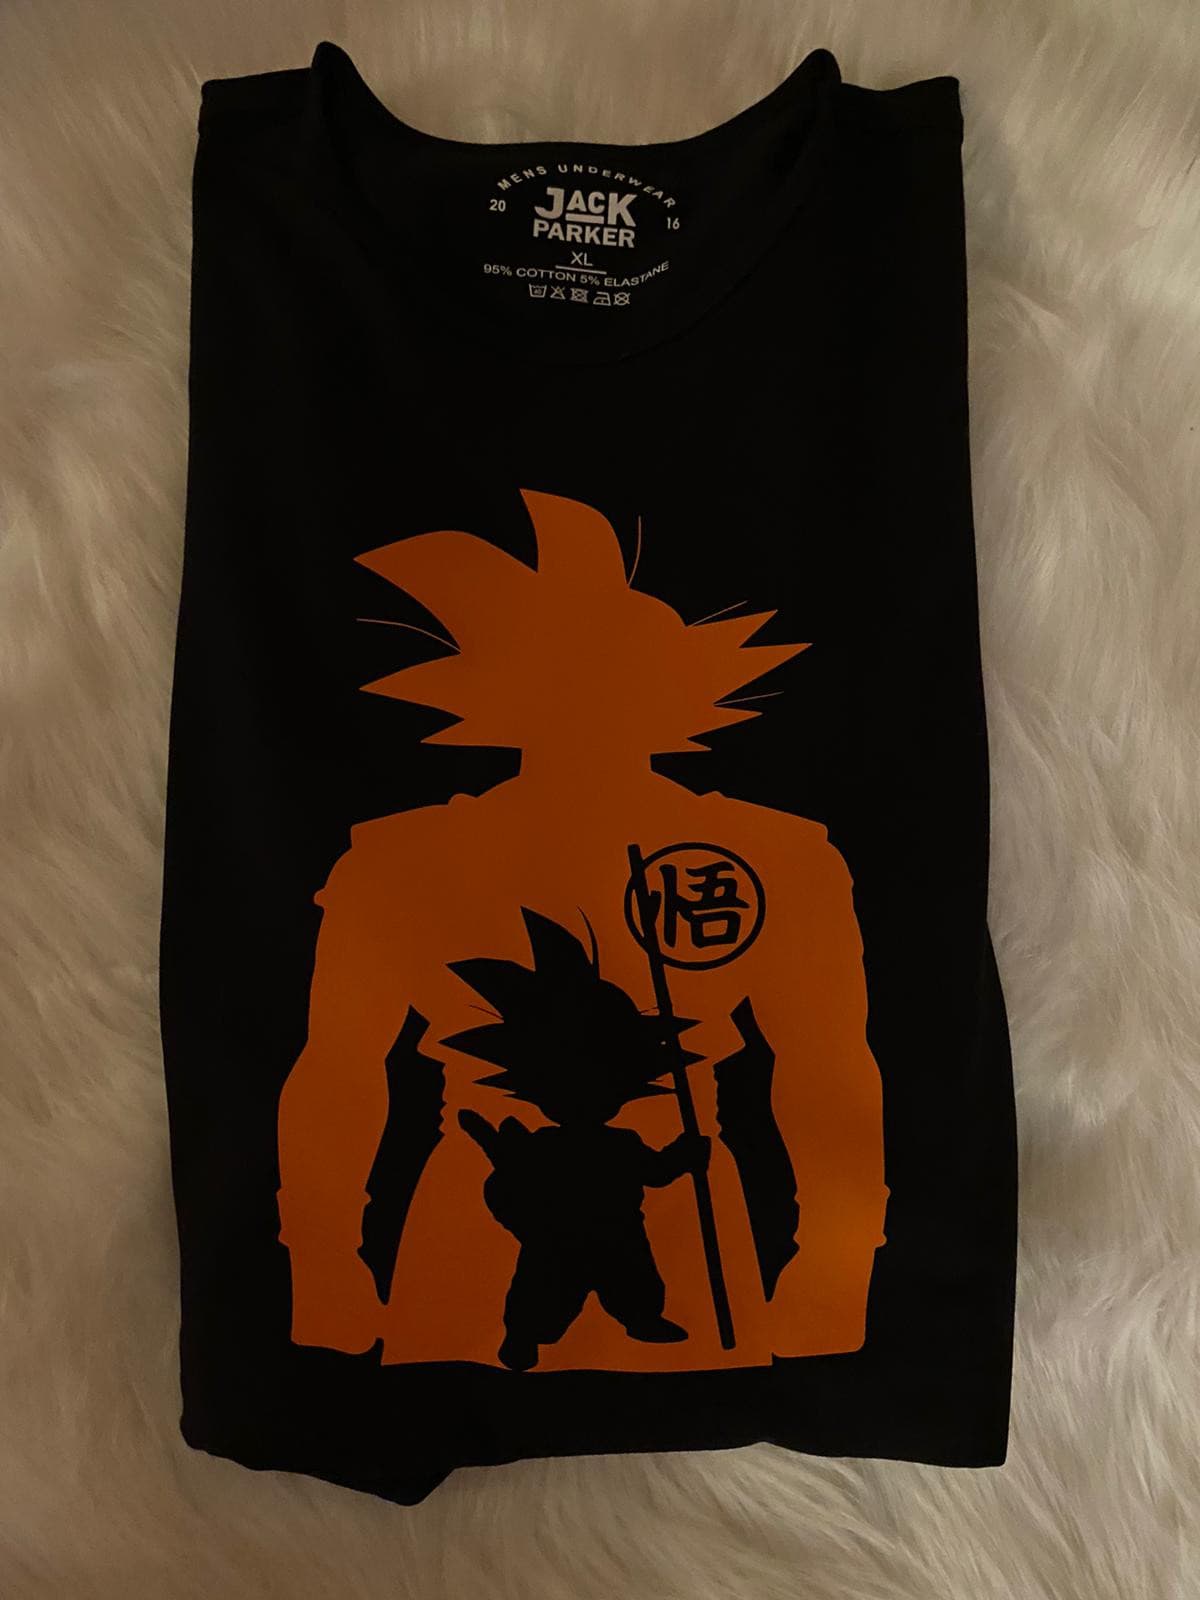 T-Shirt Son Goku